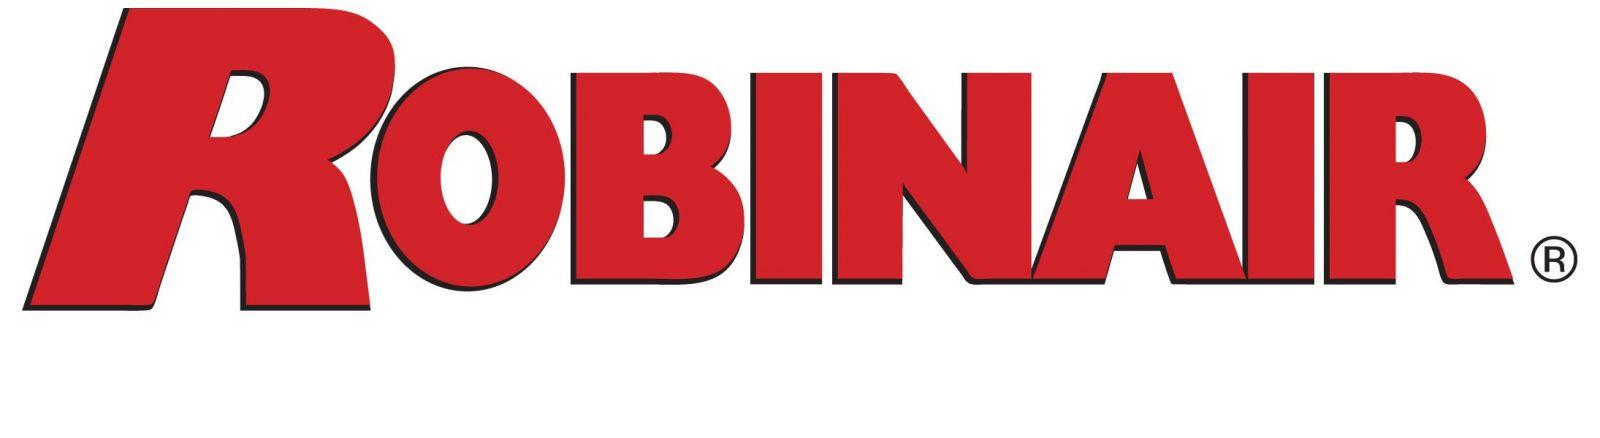 Robinair Logo - robinair&P Technologies